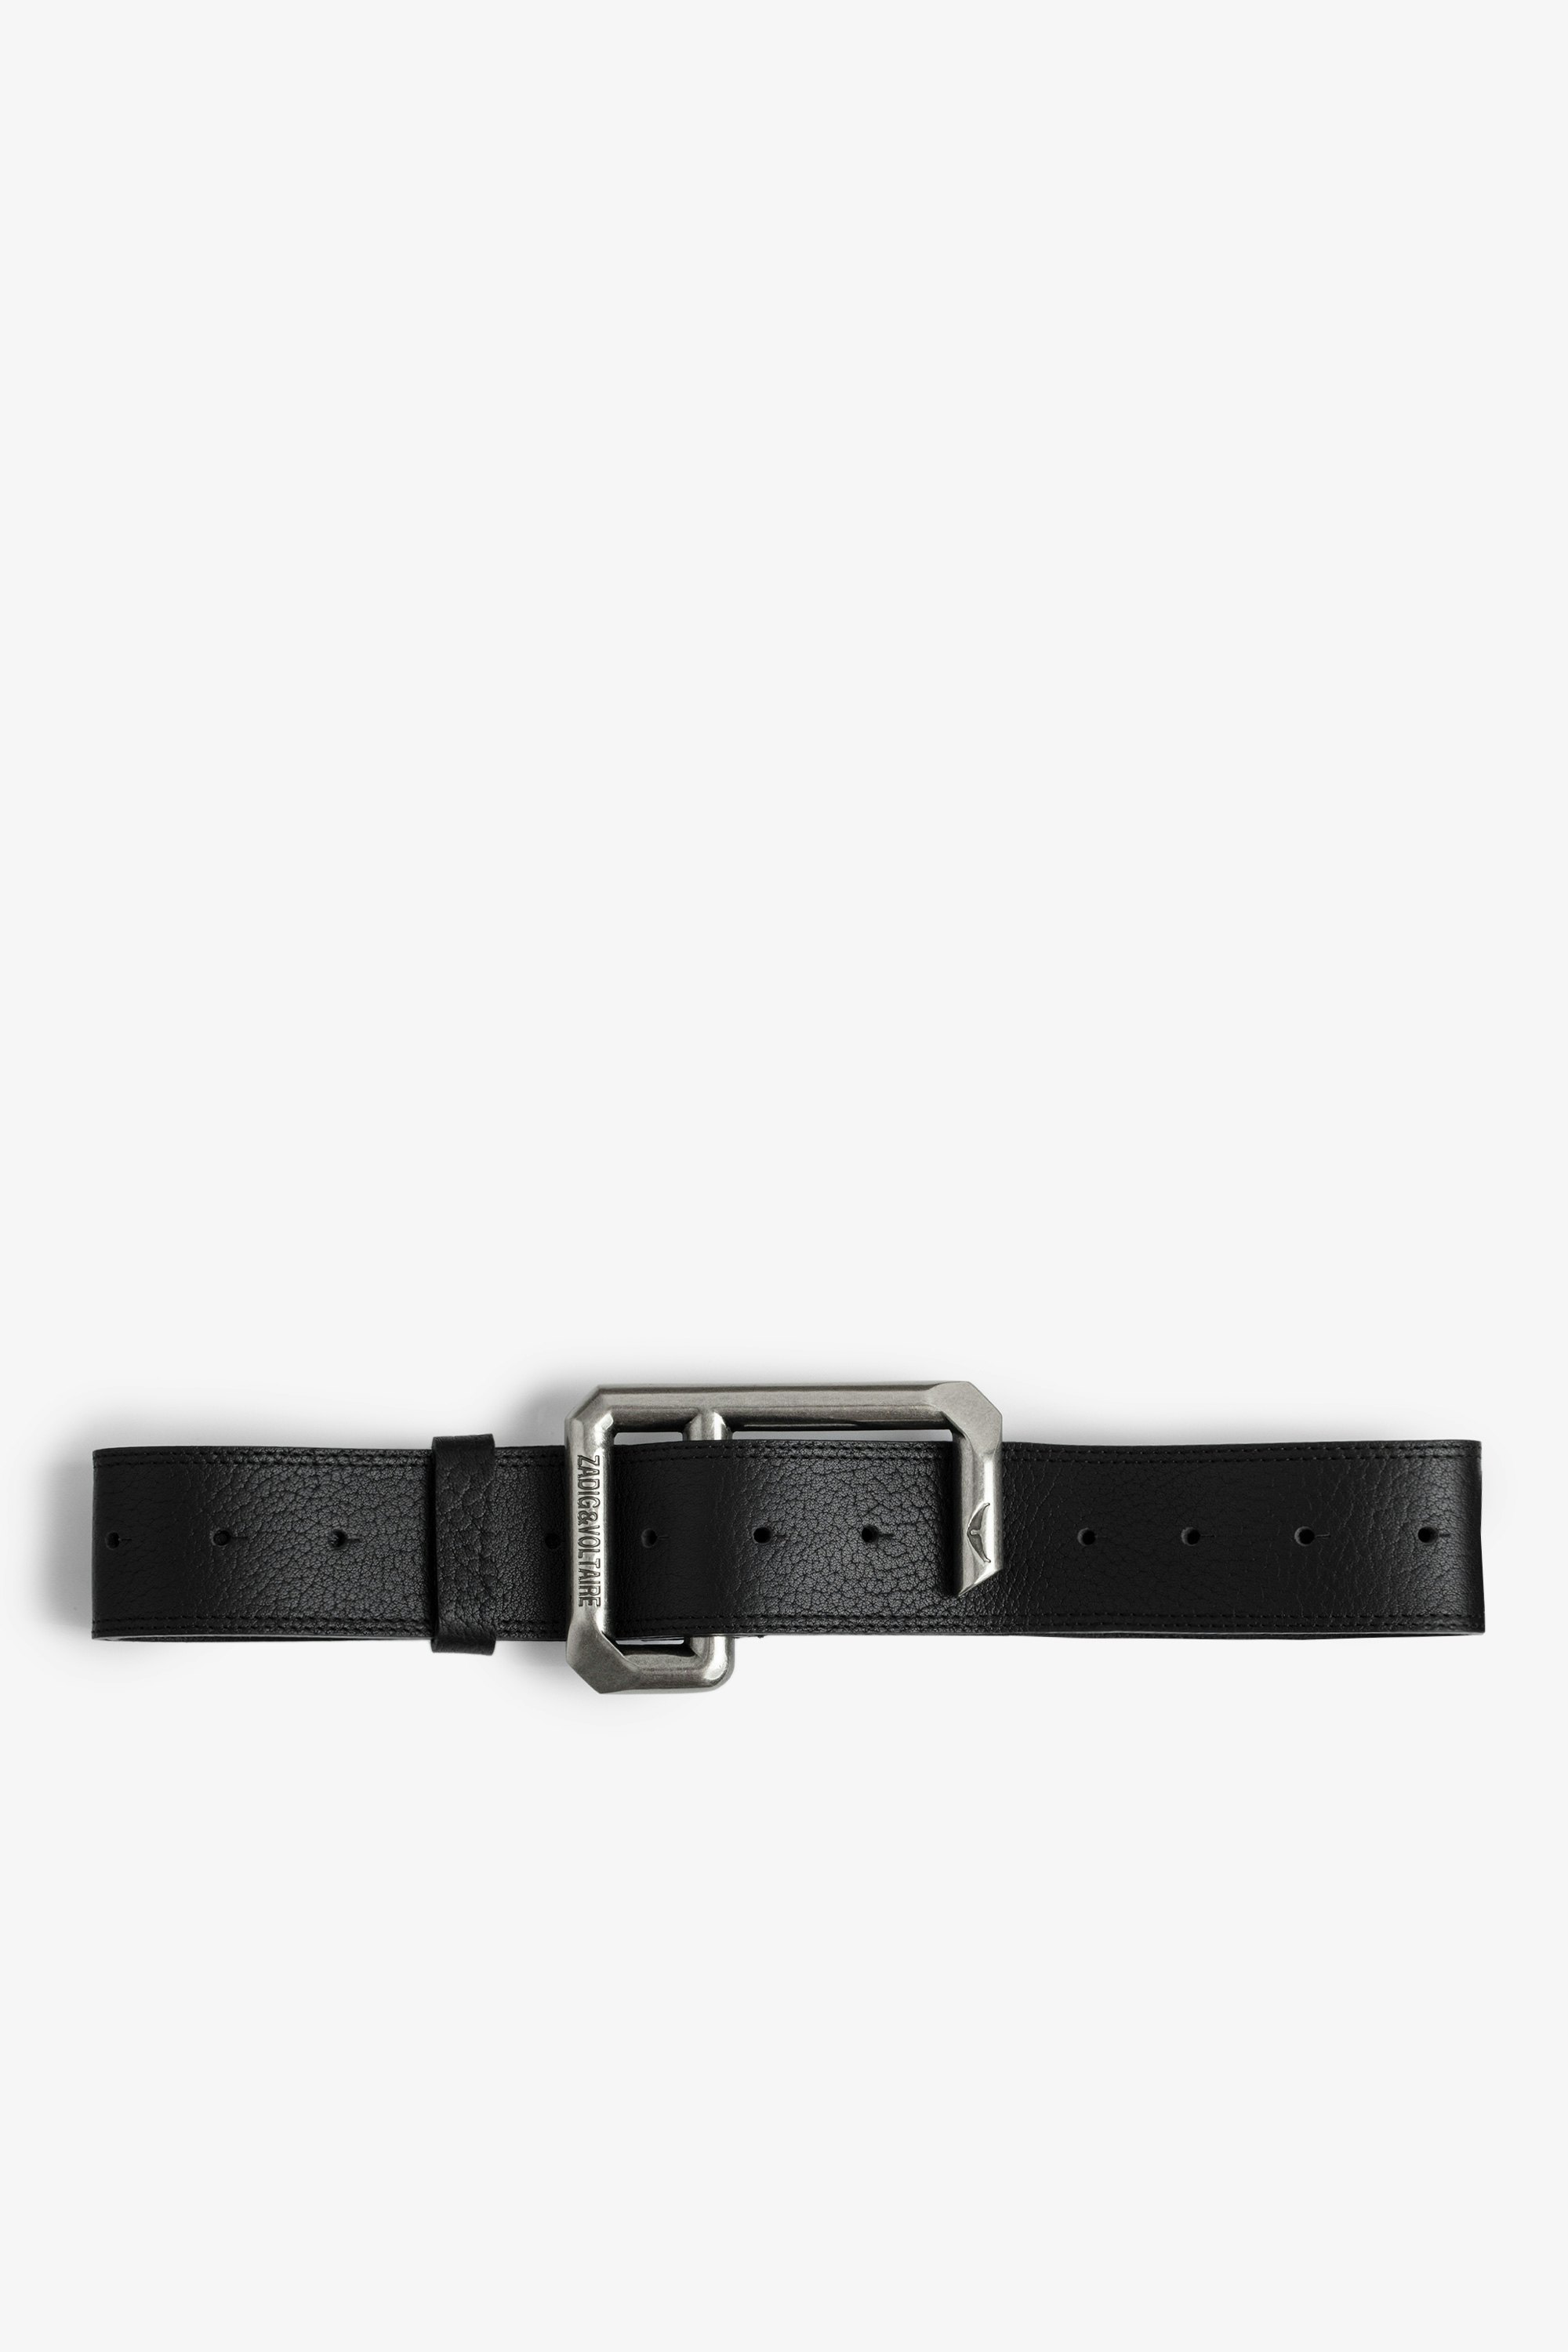 La Cecilia 50 mm Belt - Women's adjustable black leather belt with C-shaped buckle